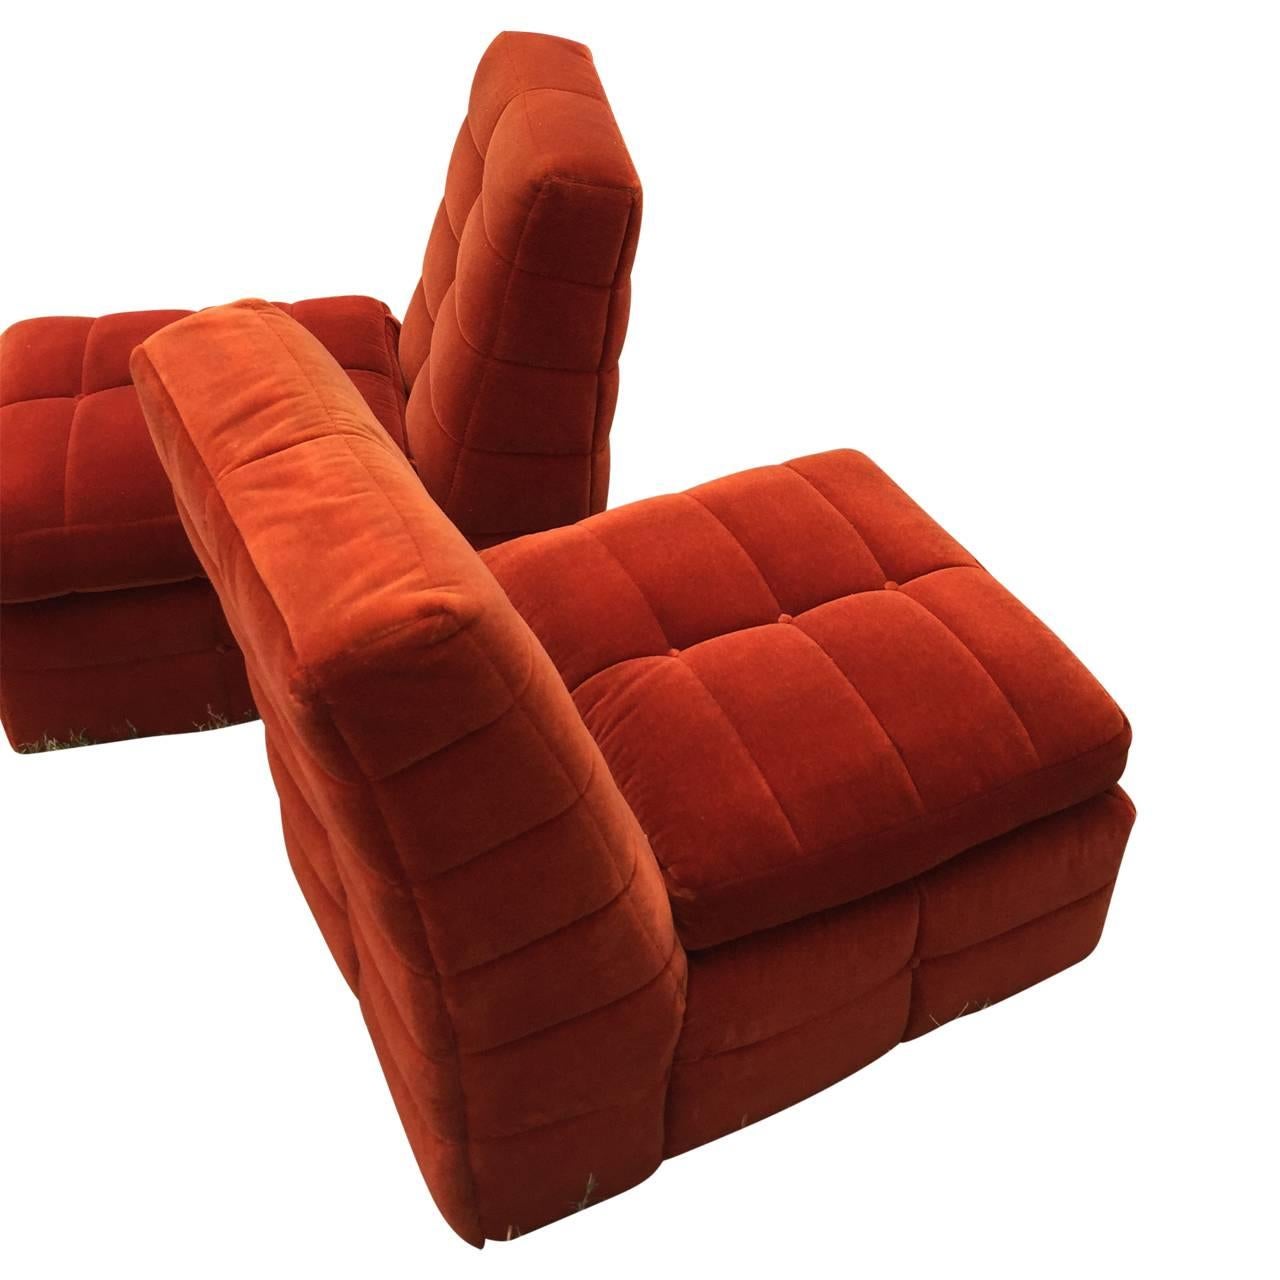 Mid-Century Modern Pair of Orange Milo Baughman Chairs